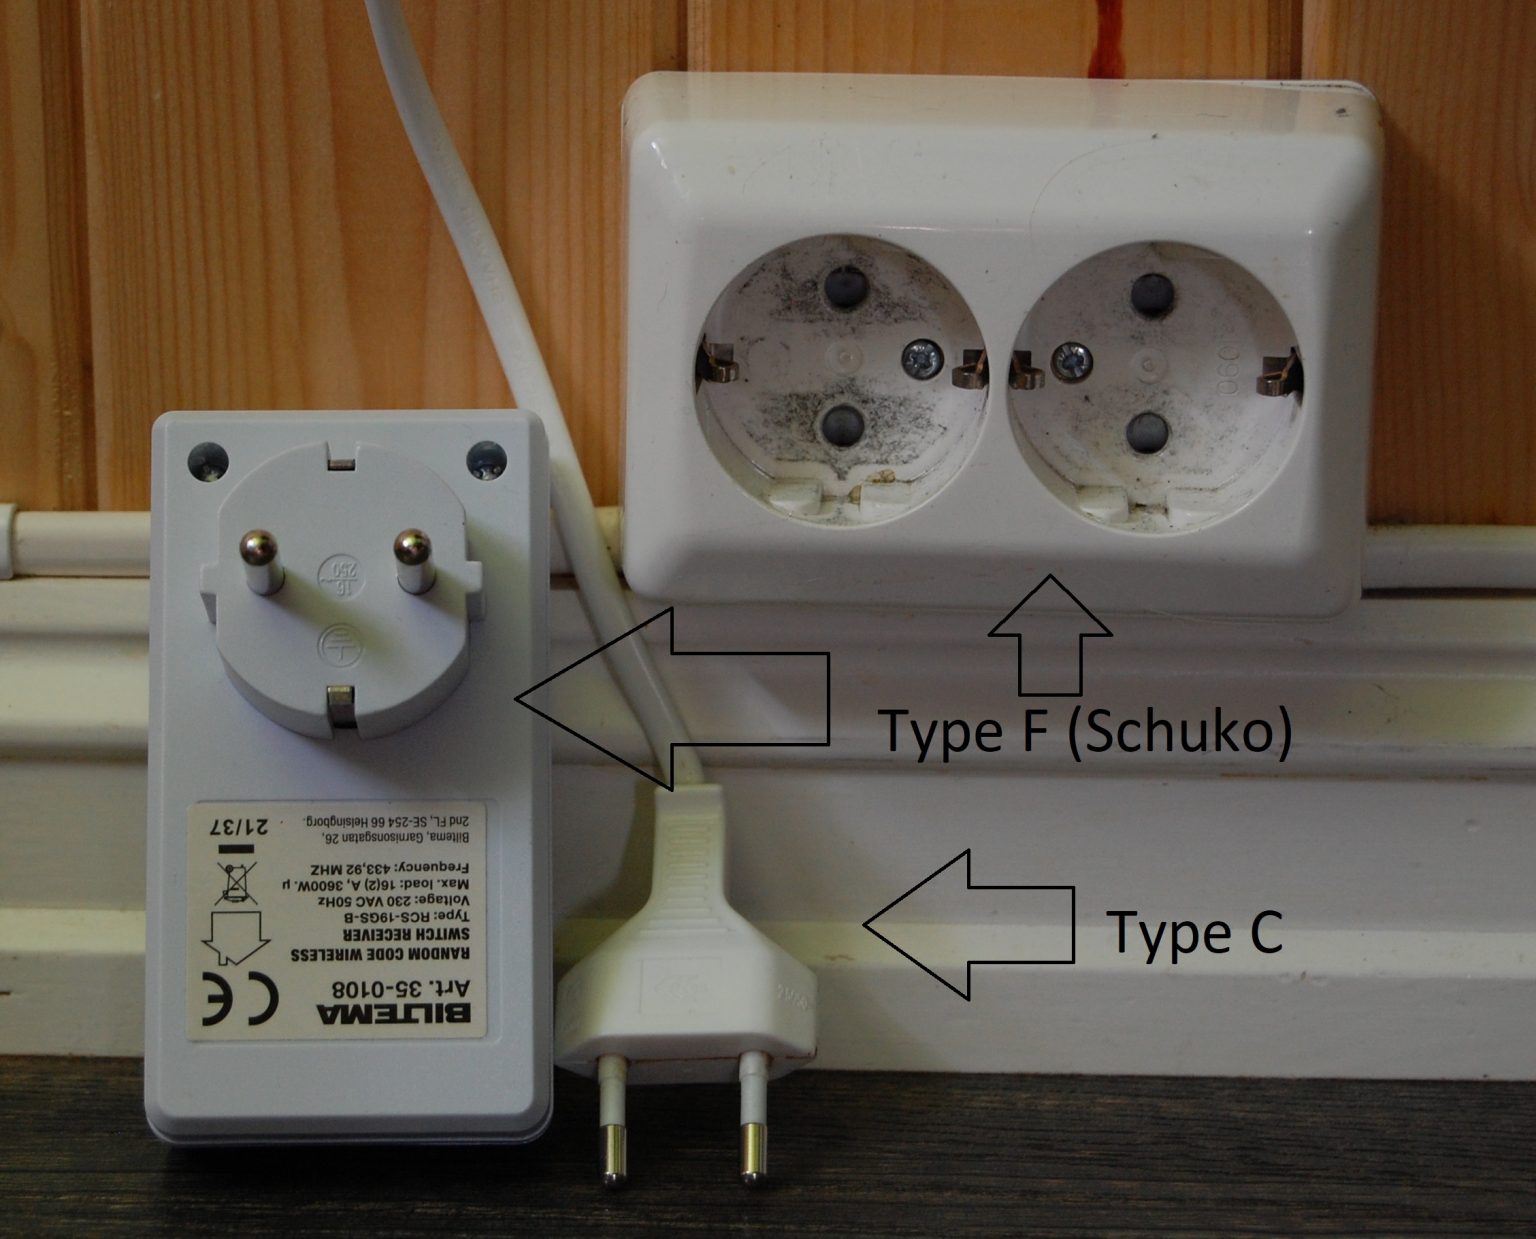 norway travel plug adapter